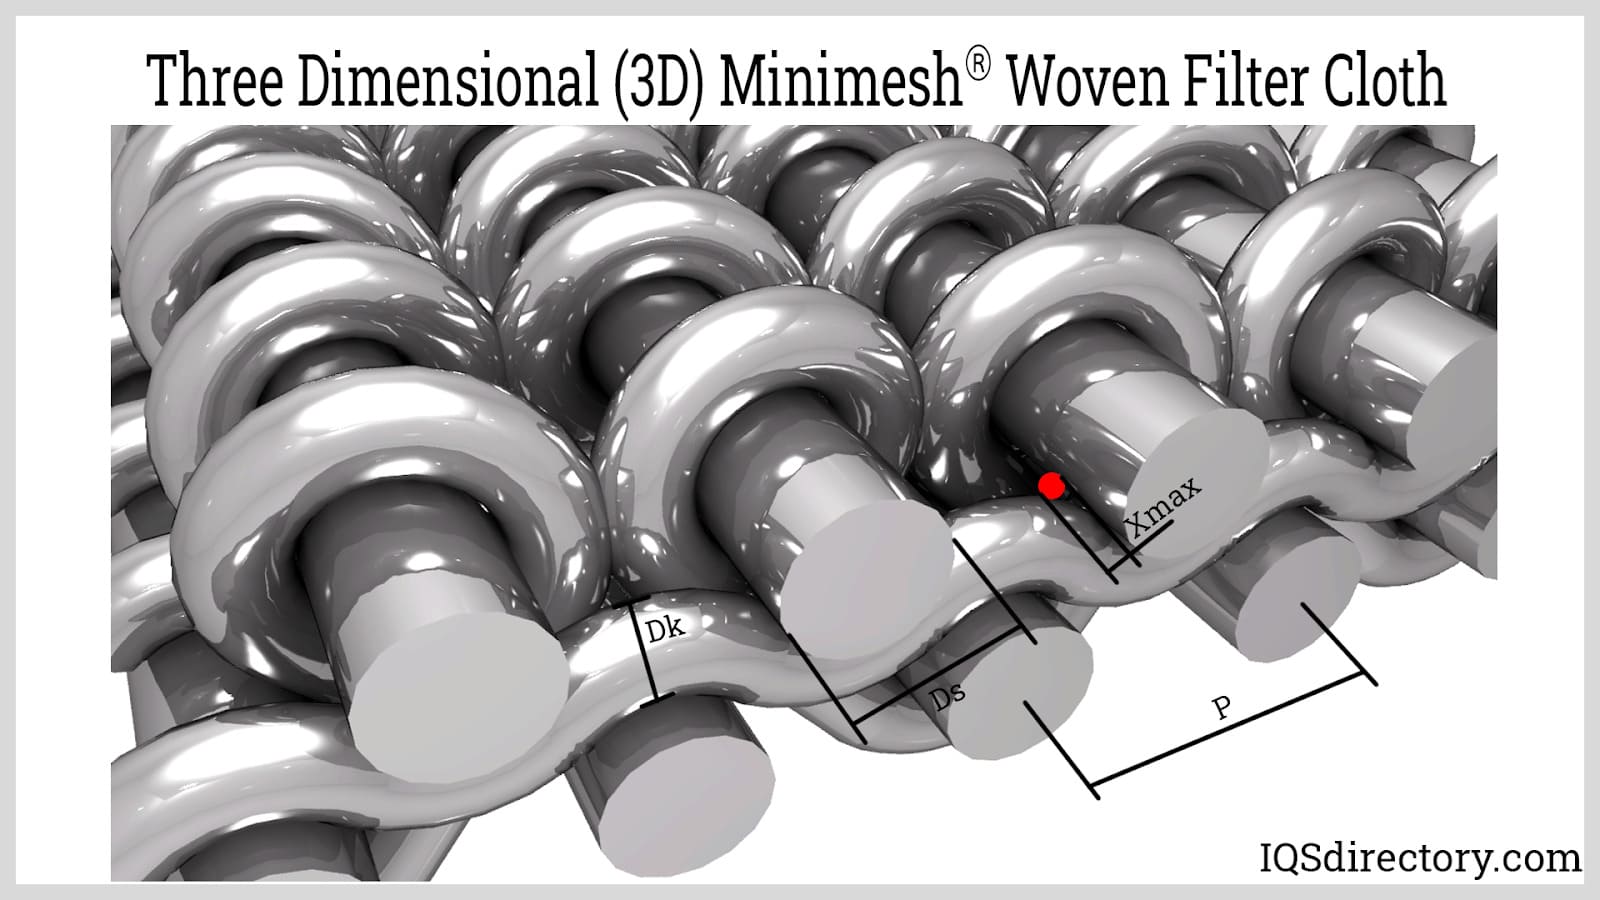 Three Dimensional (3D) Minimesh Woven Filter Cloth